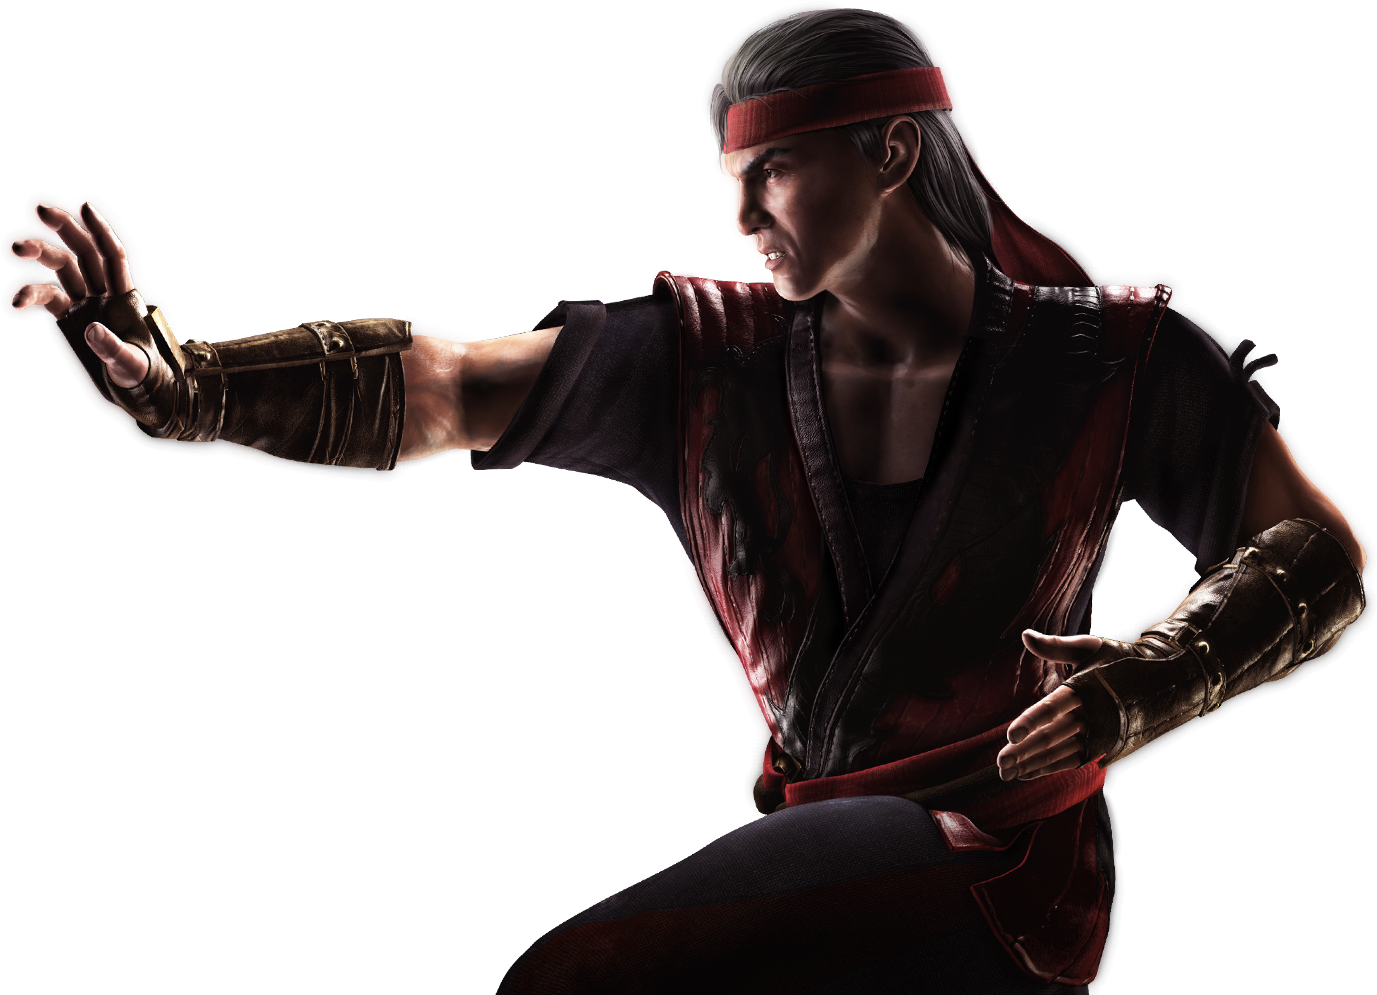 Liu Kang Mortal Kombat II Mortal Kombat 4 Mortal Kombat X, mortal Kombat,  arm png